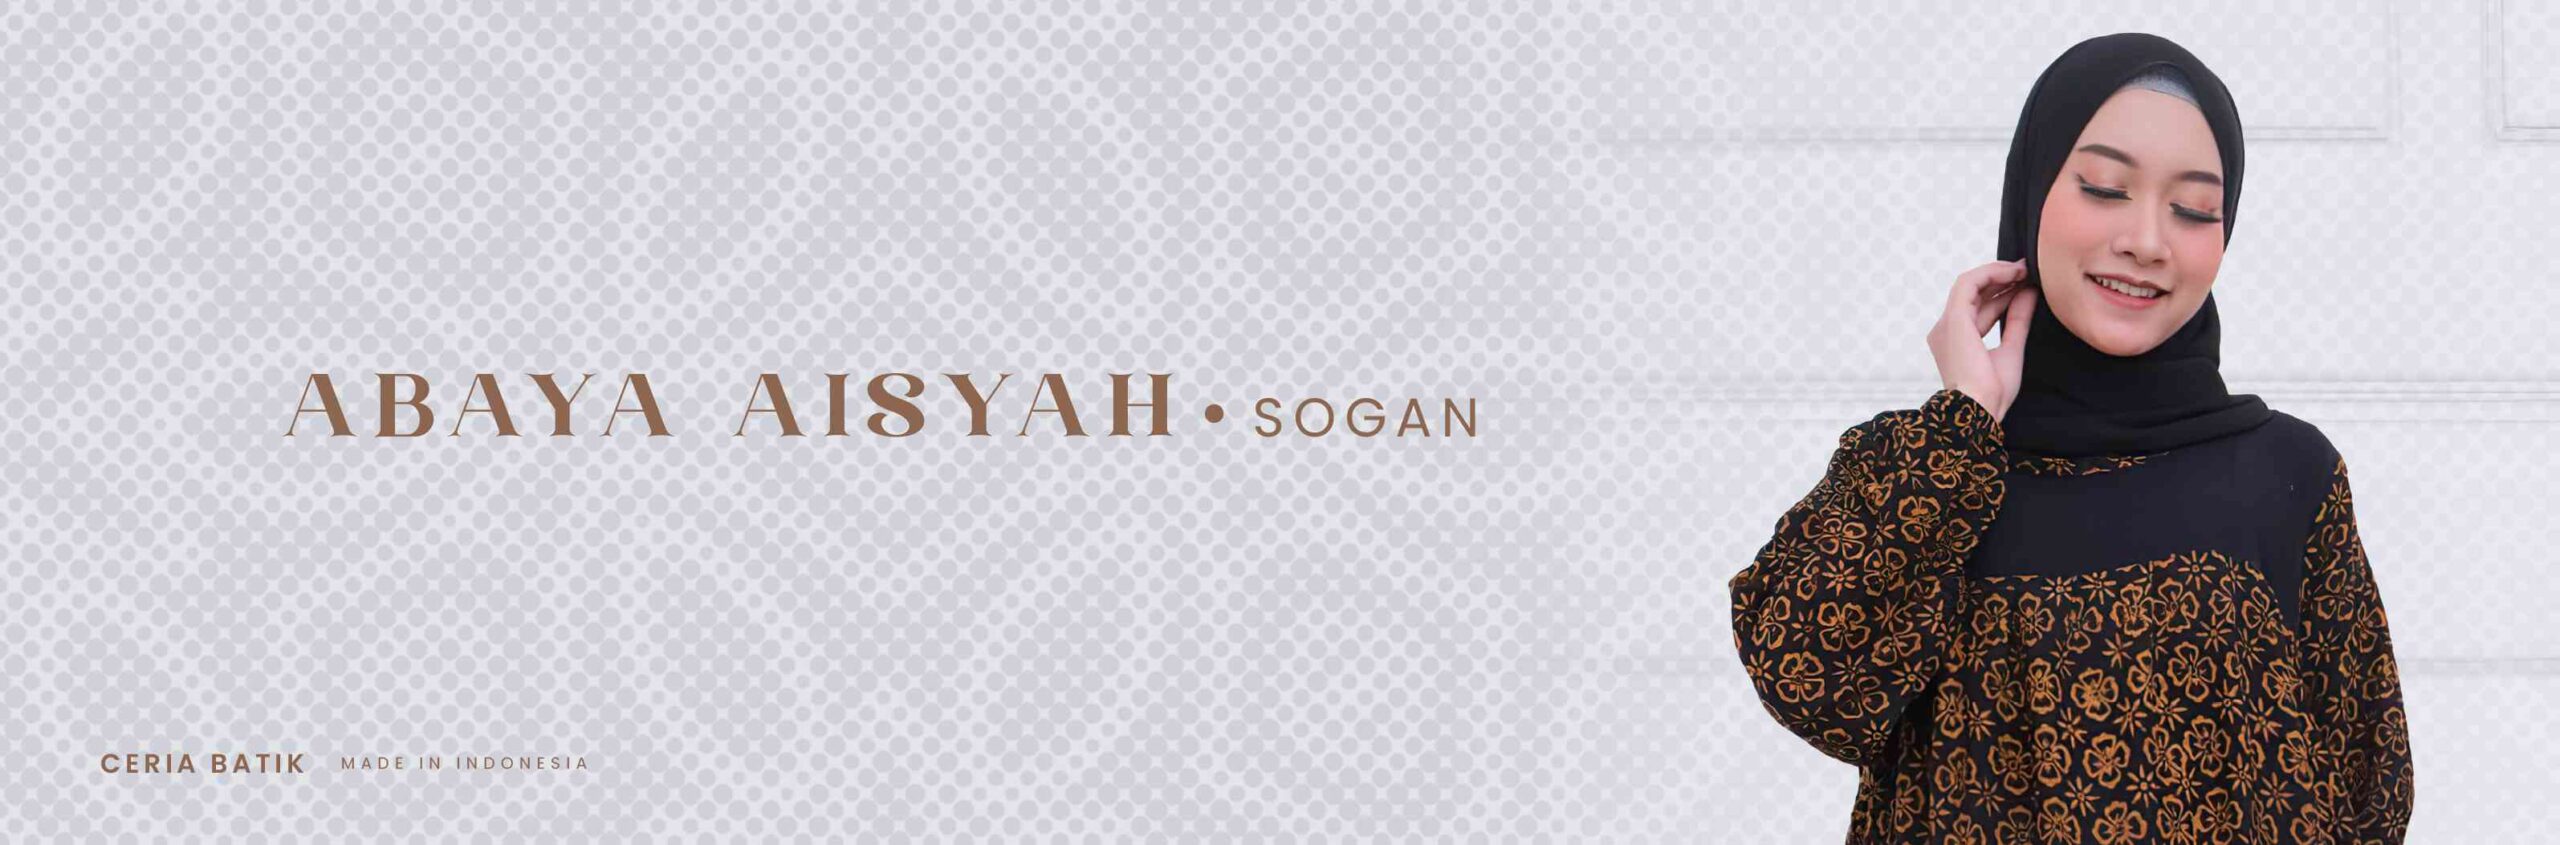 2. ABAYA AISYAH - SOGAN